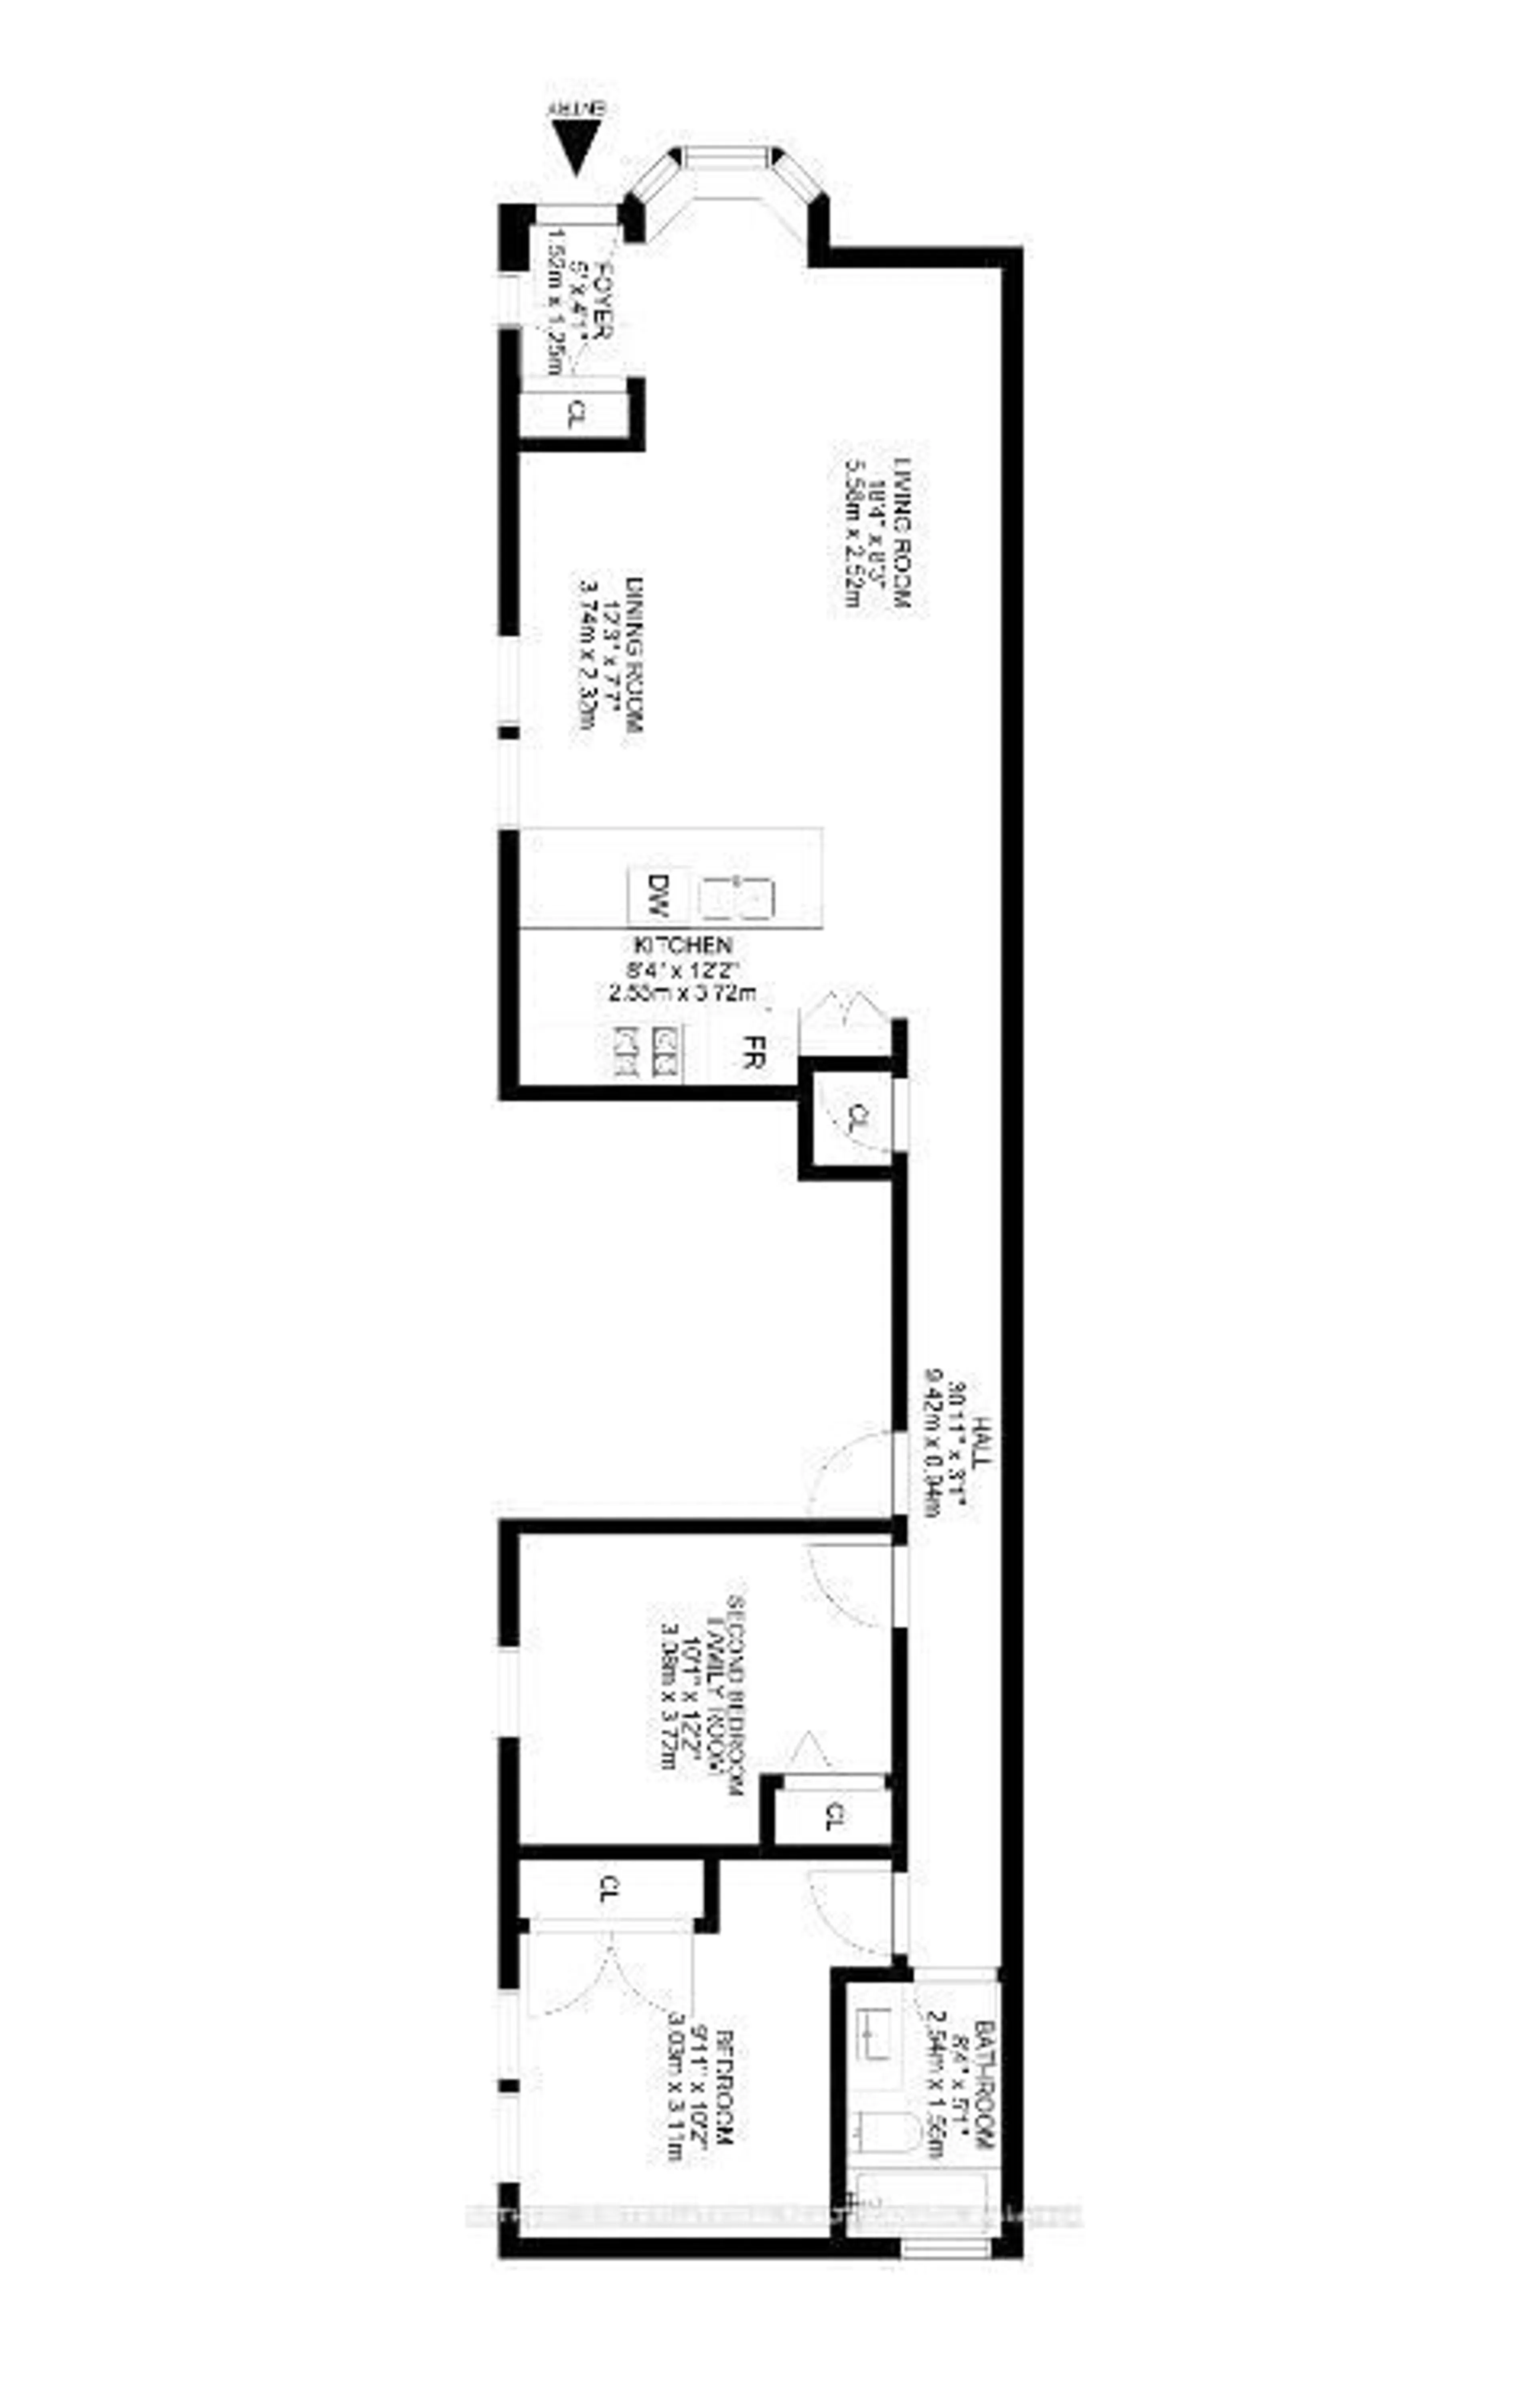 Floor plan for 1248 Avenue Rd #C, Toronto Ontario M5N 2G7